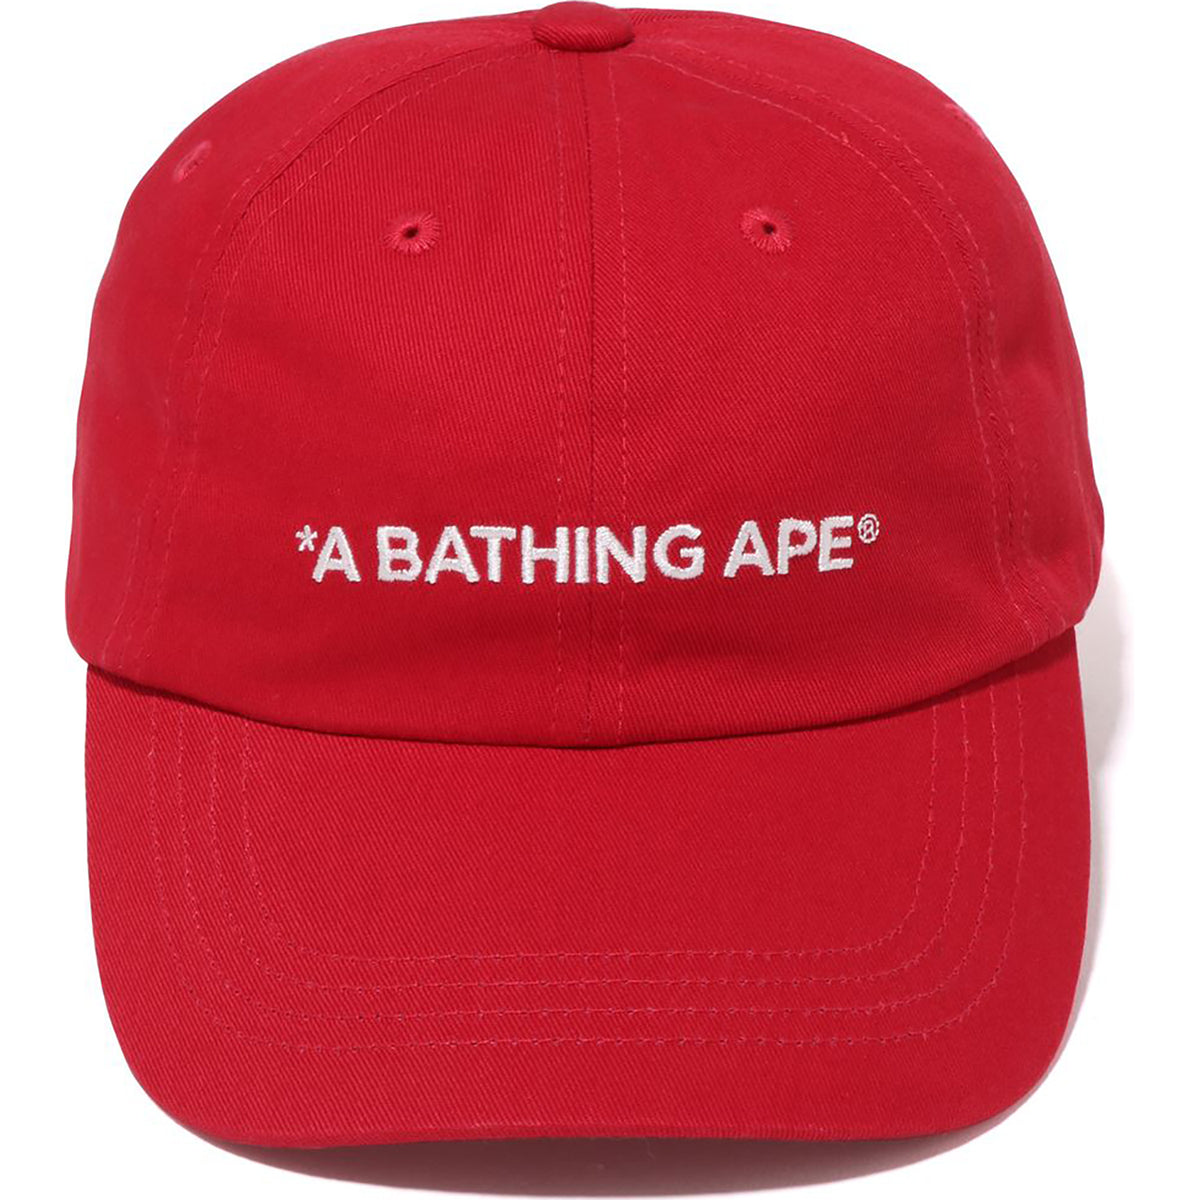 A BATHING APE 6PANEL CAP MENS